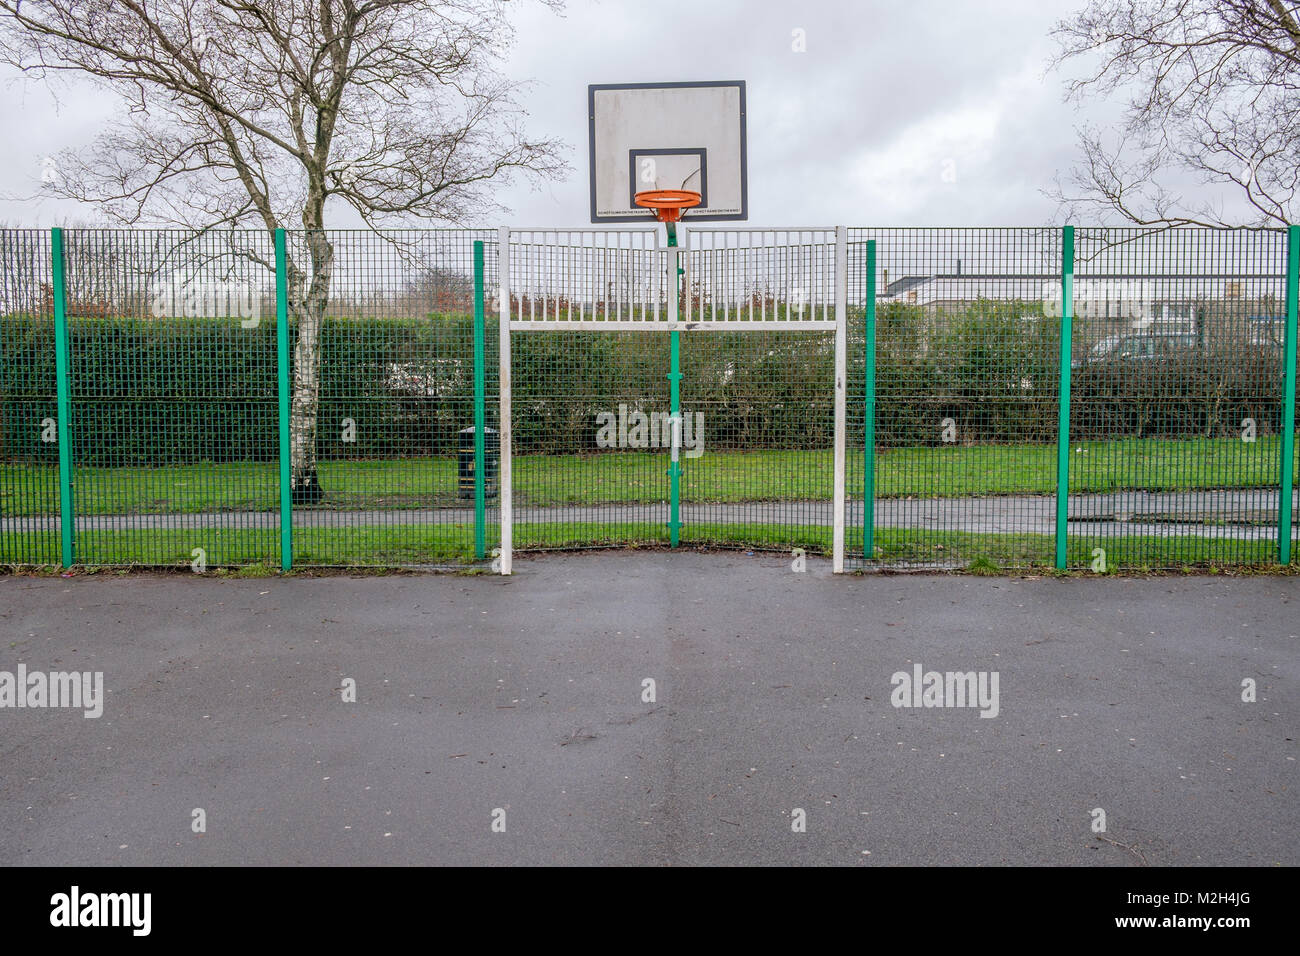 An empty basketball area where children play Stock Photo